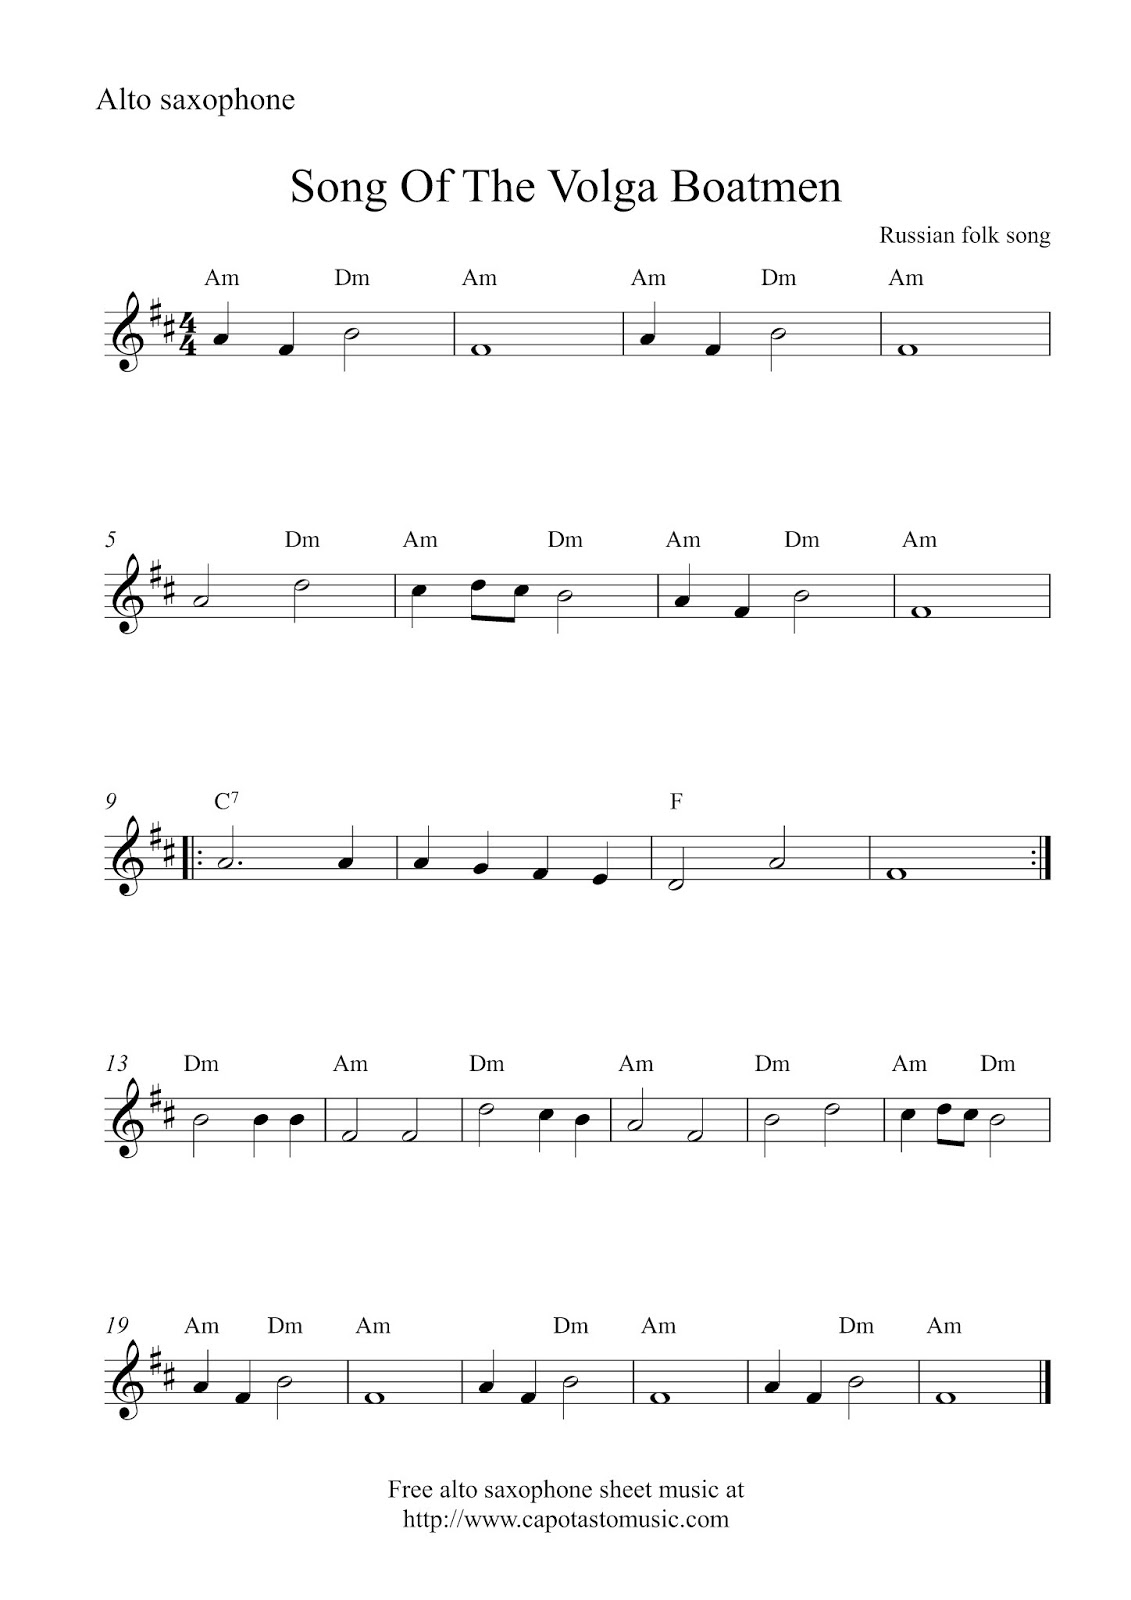 free-alto-saxophone-sheet-music-song-of-the-volga-boatmen